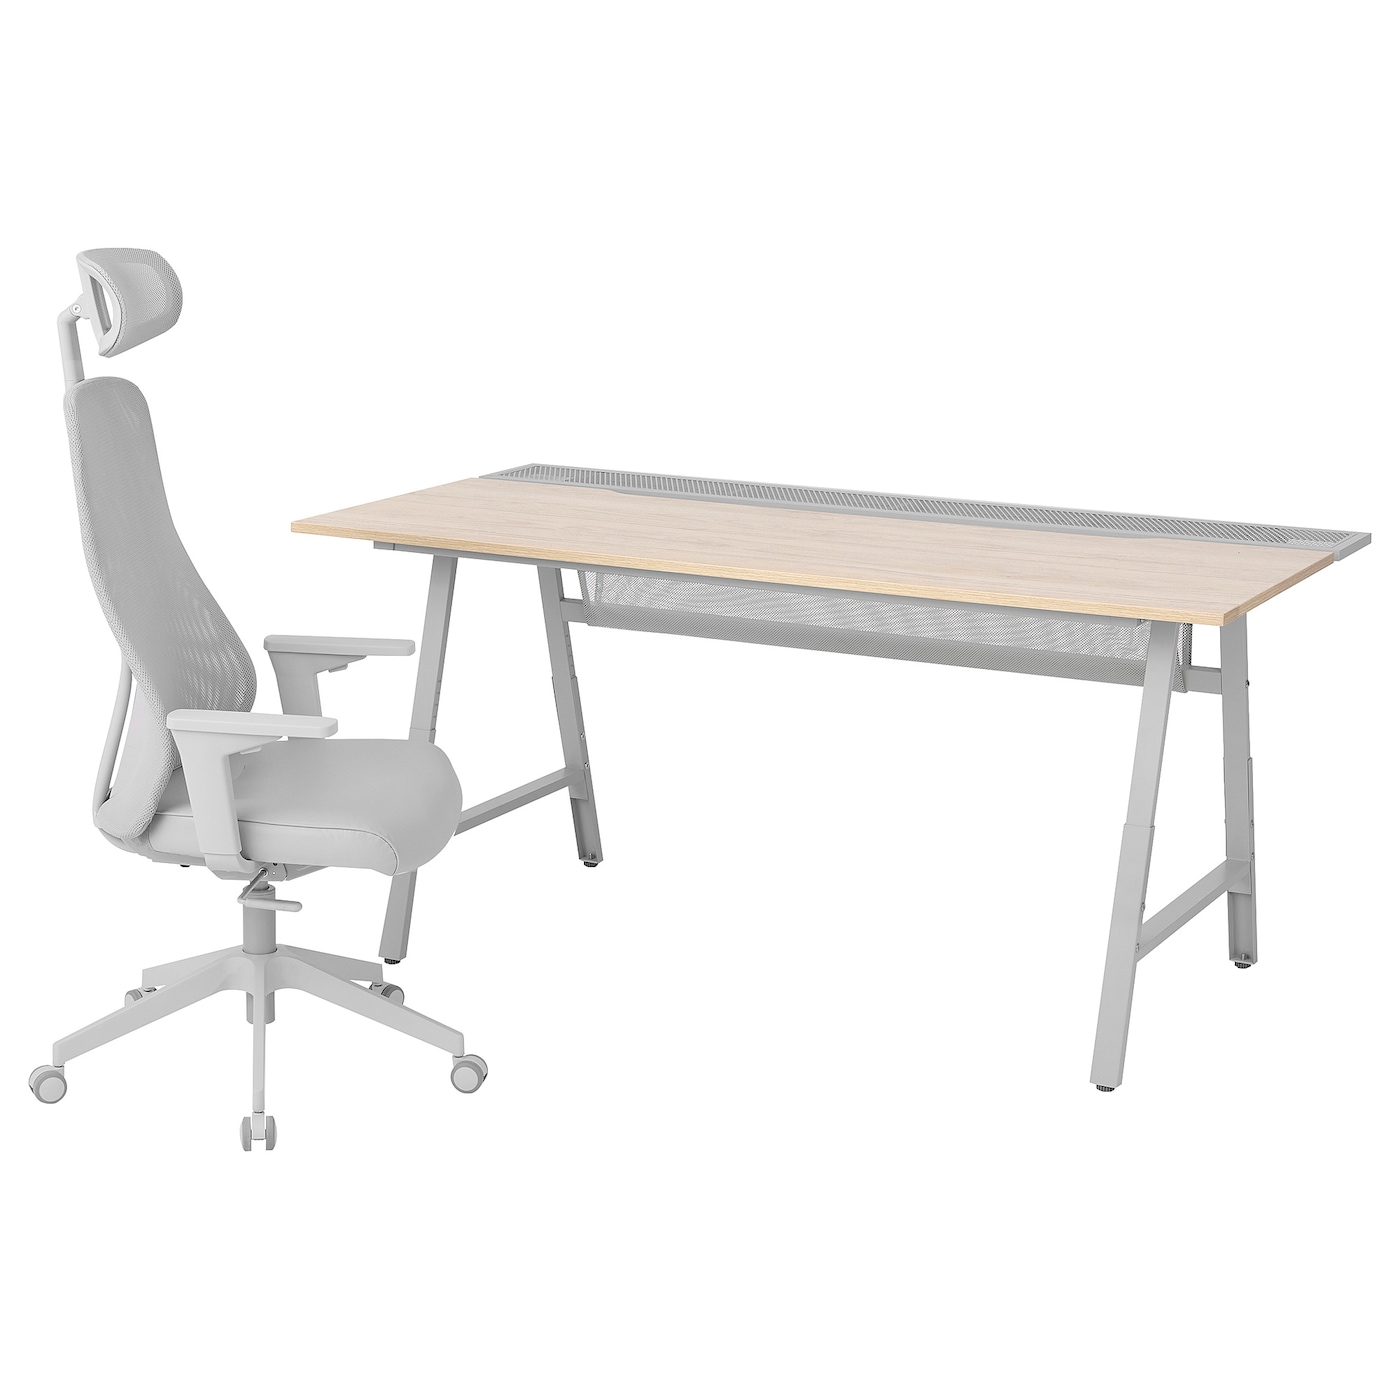 Игровой стол и стул - IKEA UTESPELARE / MATCHSPEL, серый/белый/бежевый, УТЕСПЕЛАРЕ/МАТЧСПЕЛ ИКЕА